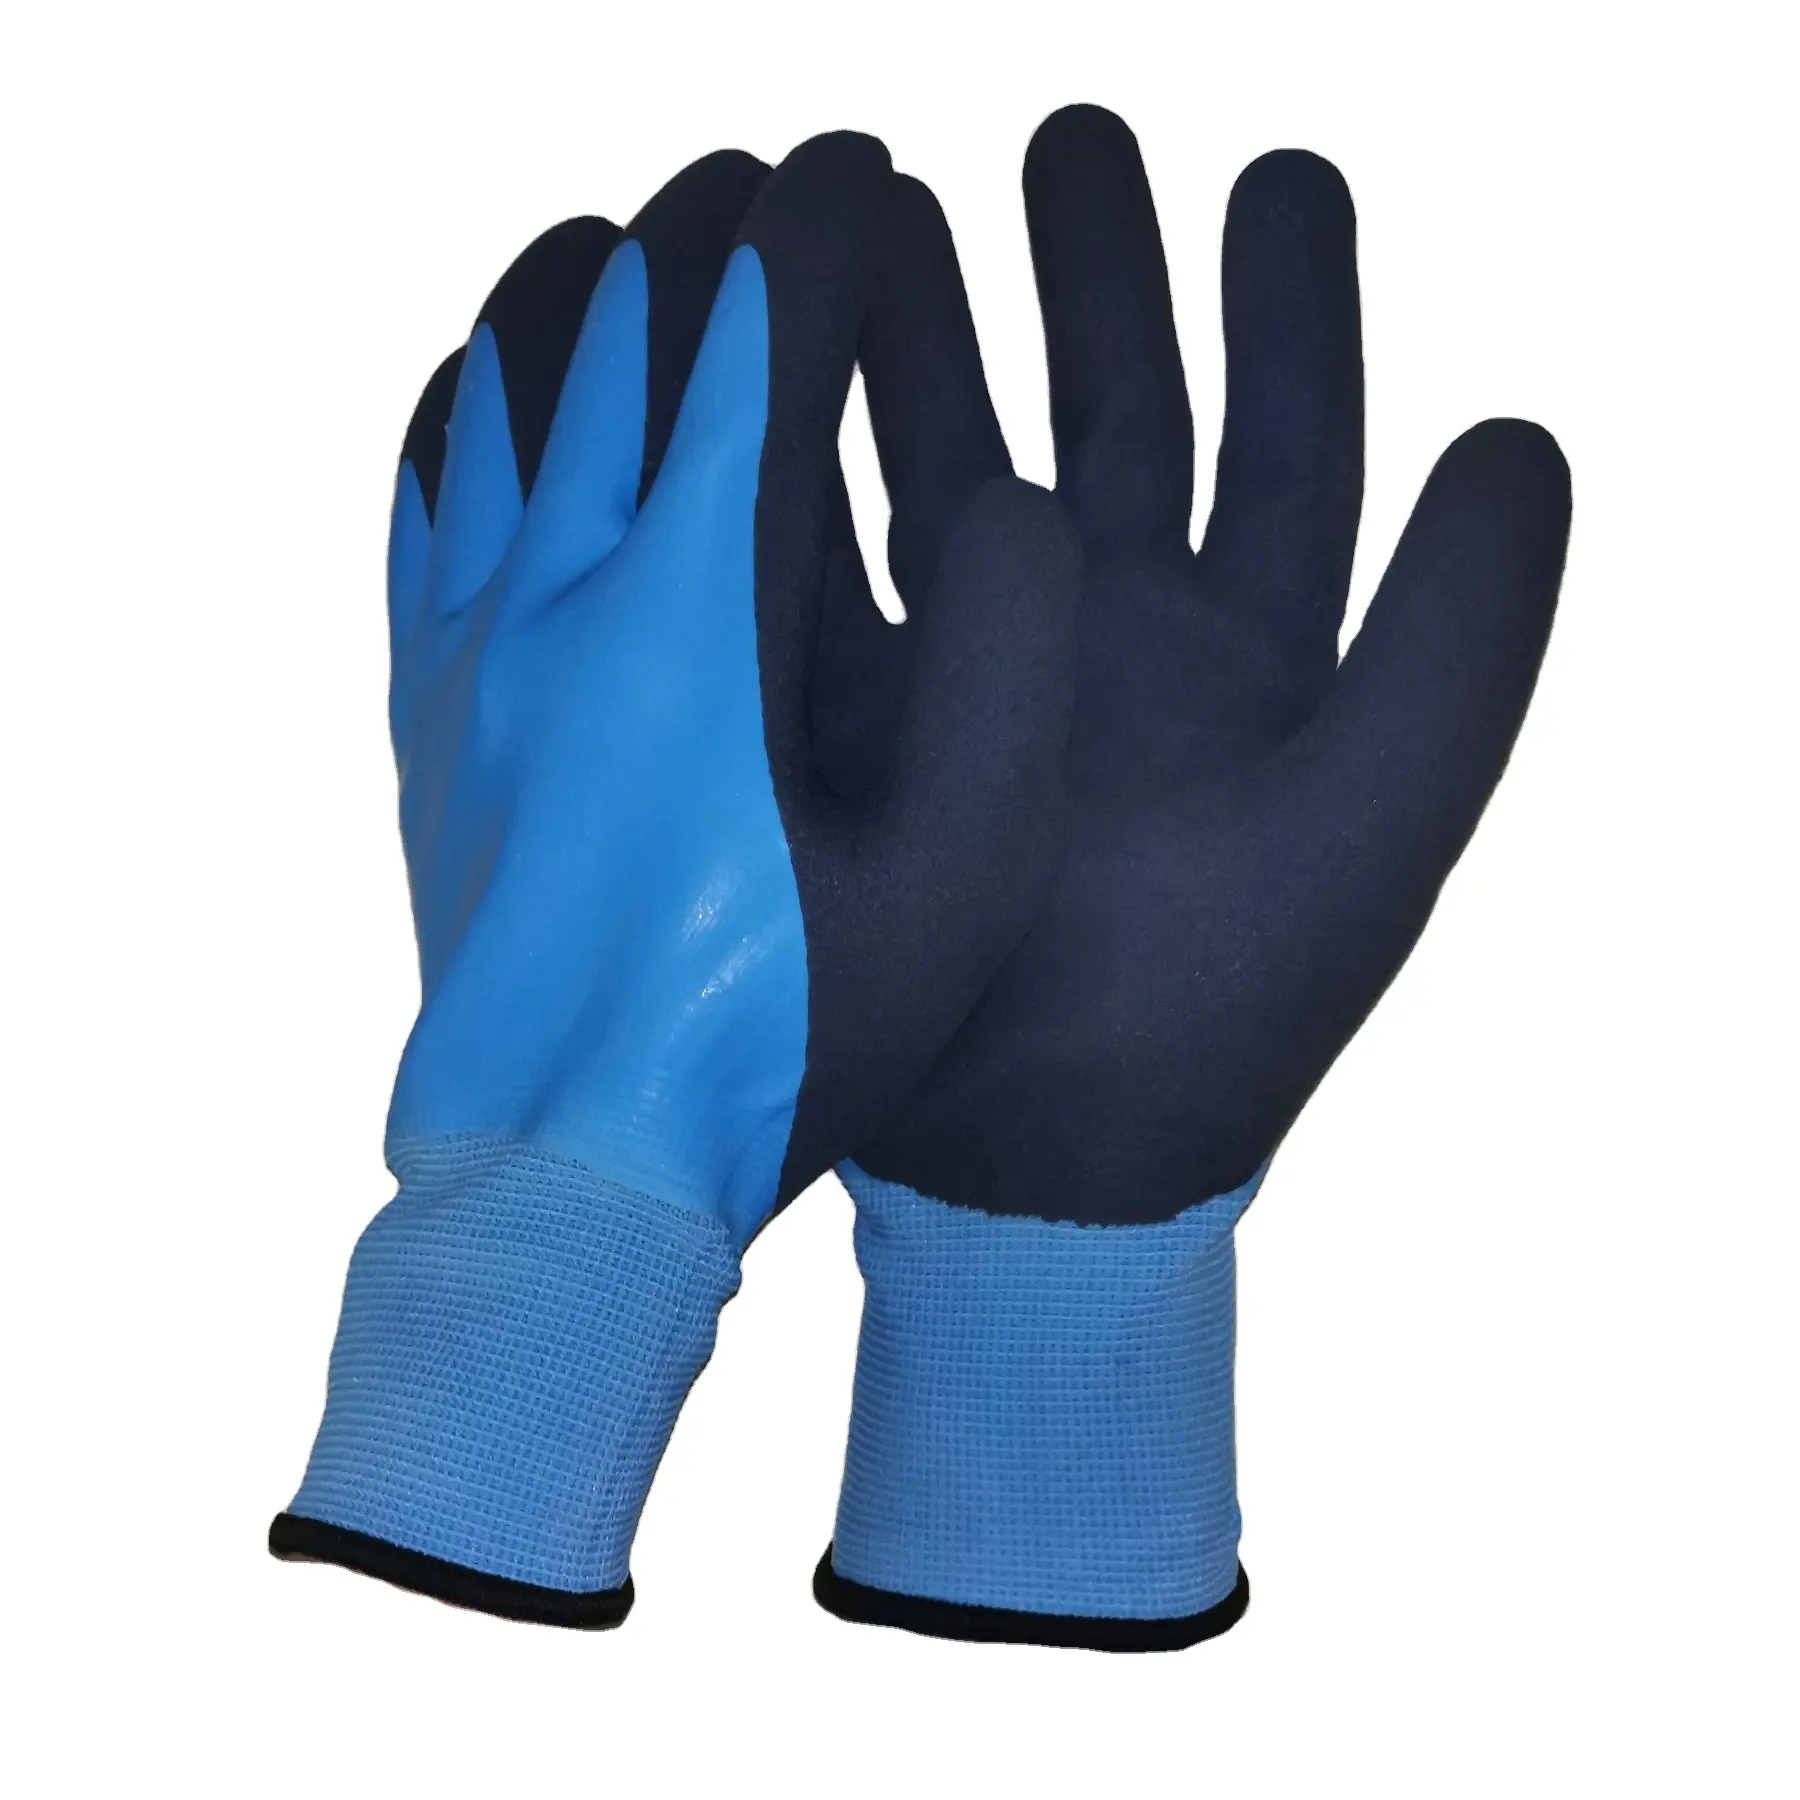 Double Latex Dipping Coated Sandy Surface Polyester dicke wasserdichte Arbeits sicherheit Arbeits handschuhe